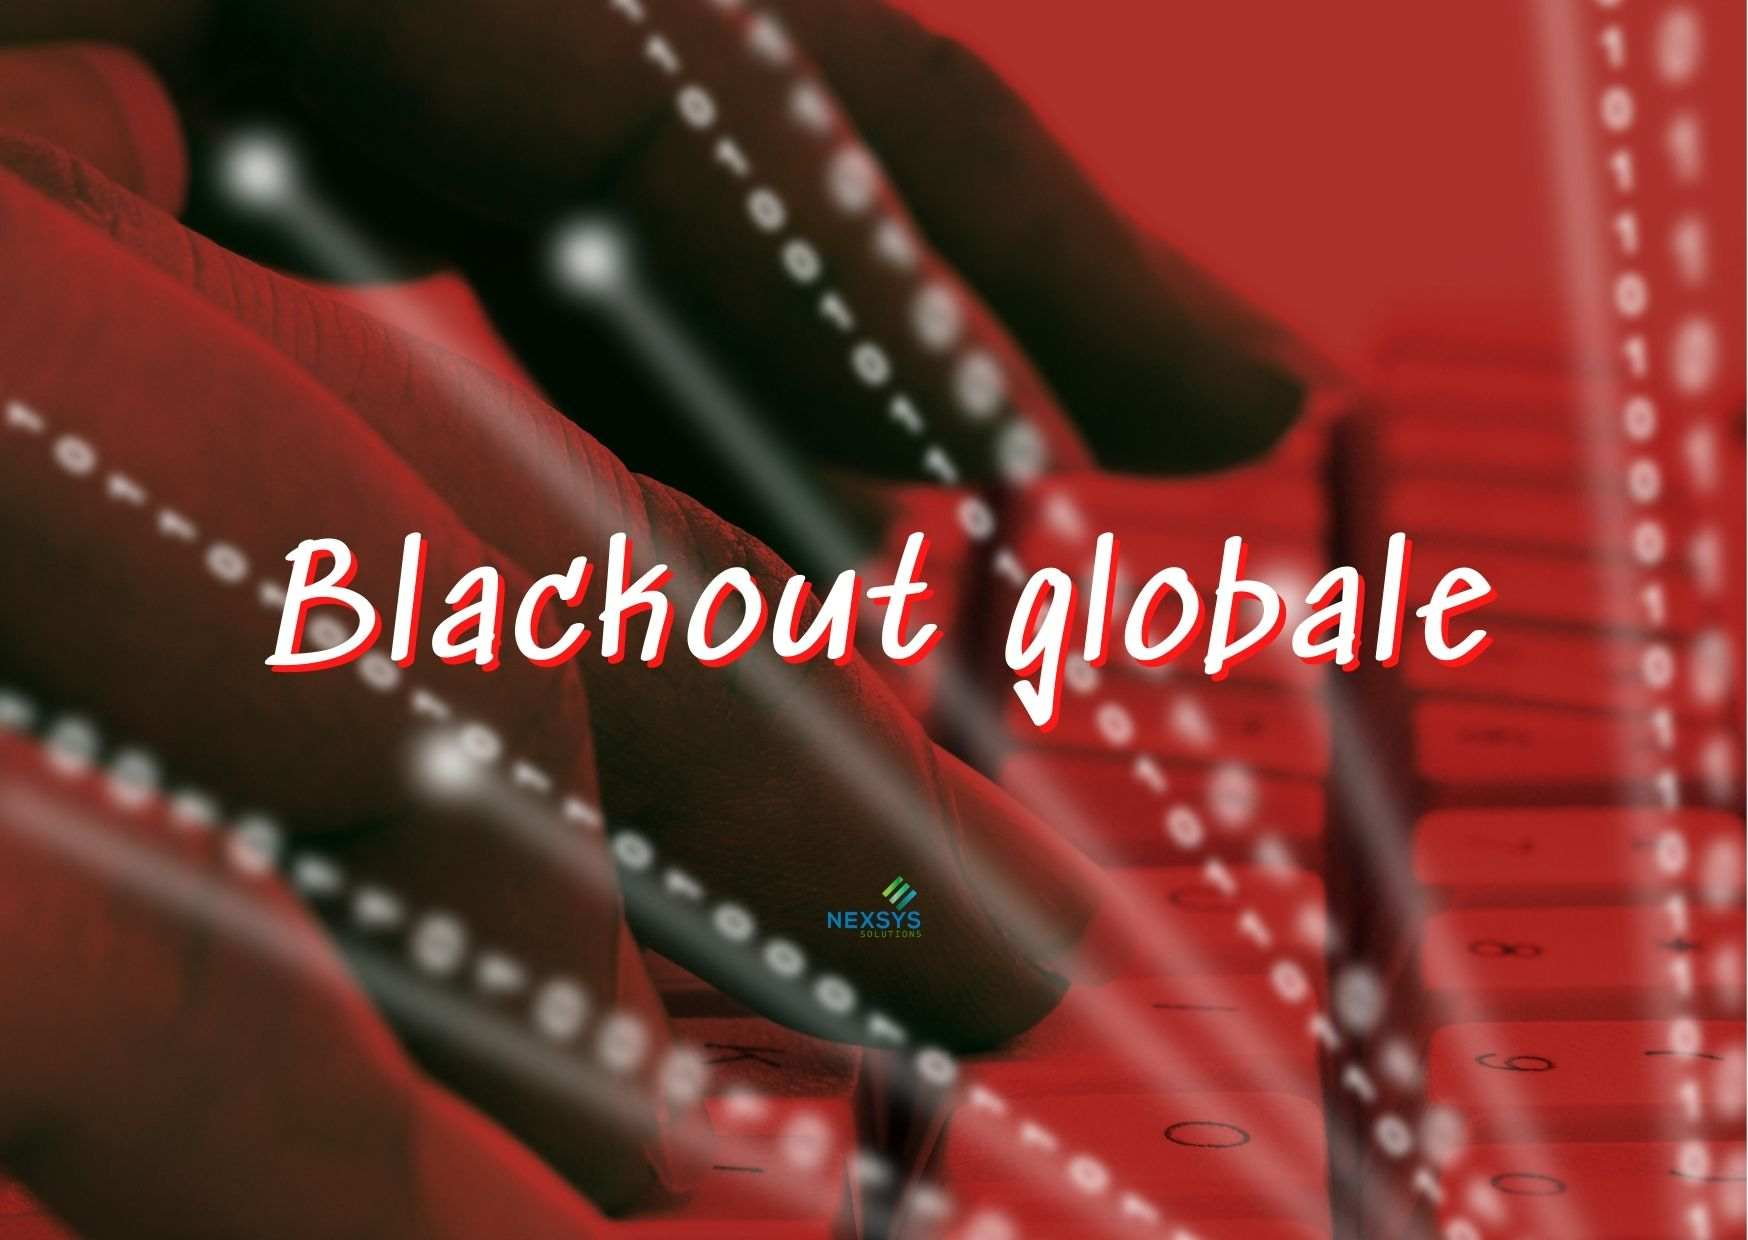 Blackout-globale